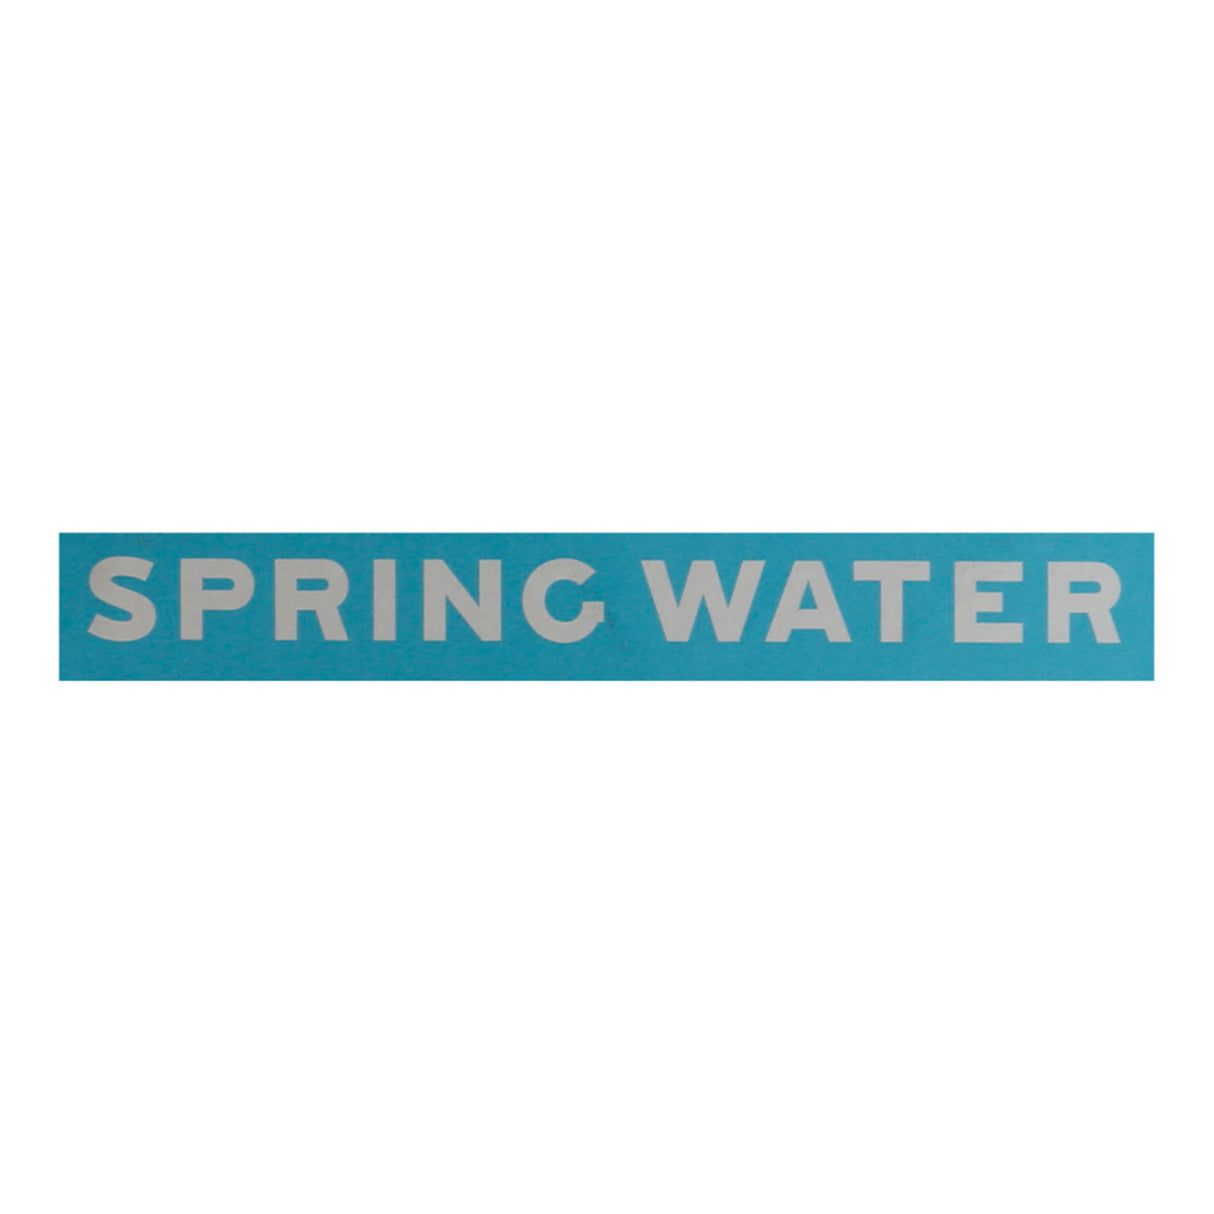 Proud Source Water Spring Alkaline pH 8.1 - Case of 3 - 8/12 fl. oz. Bottles - Cozy Farm 